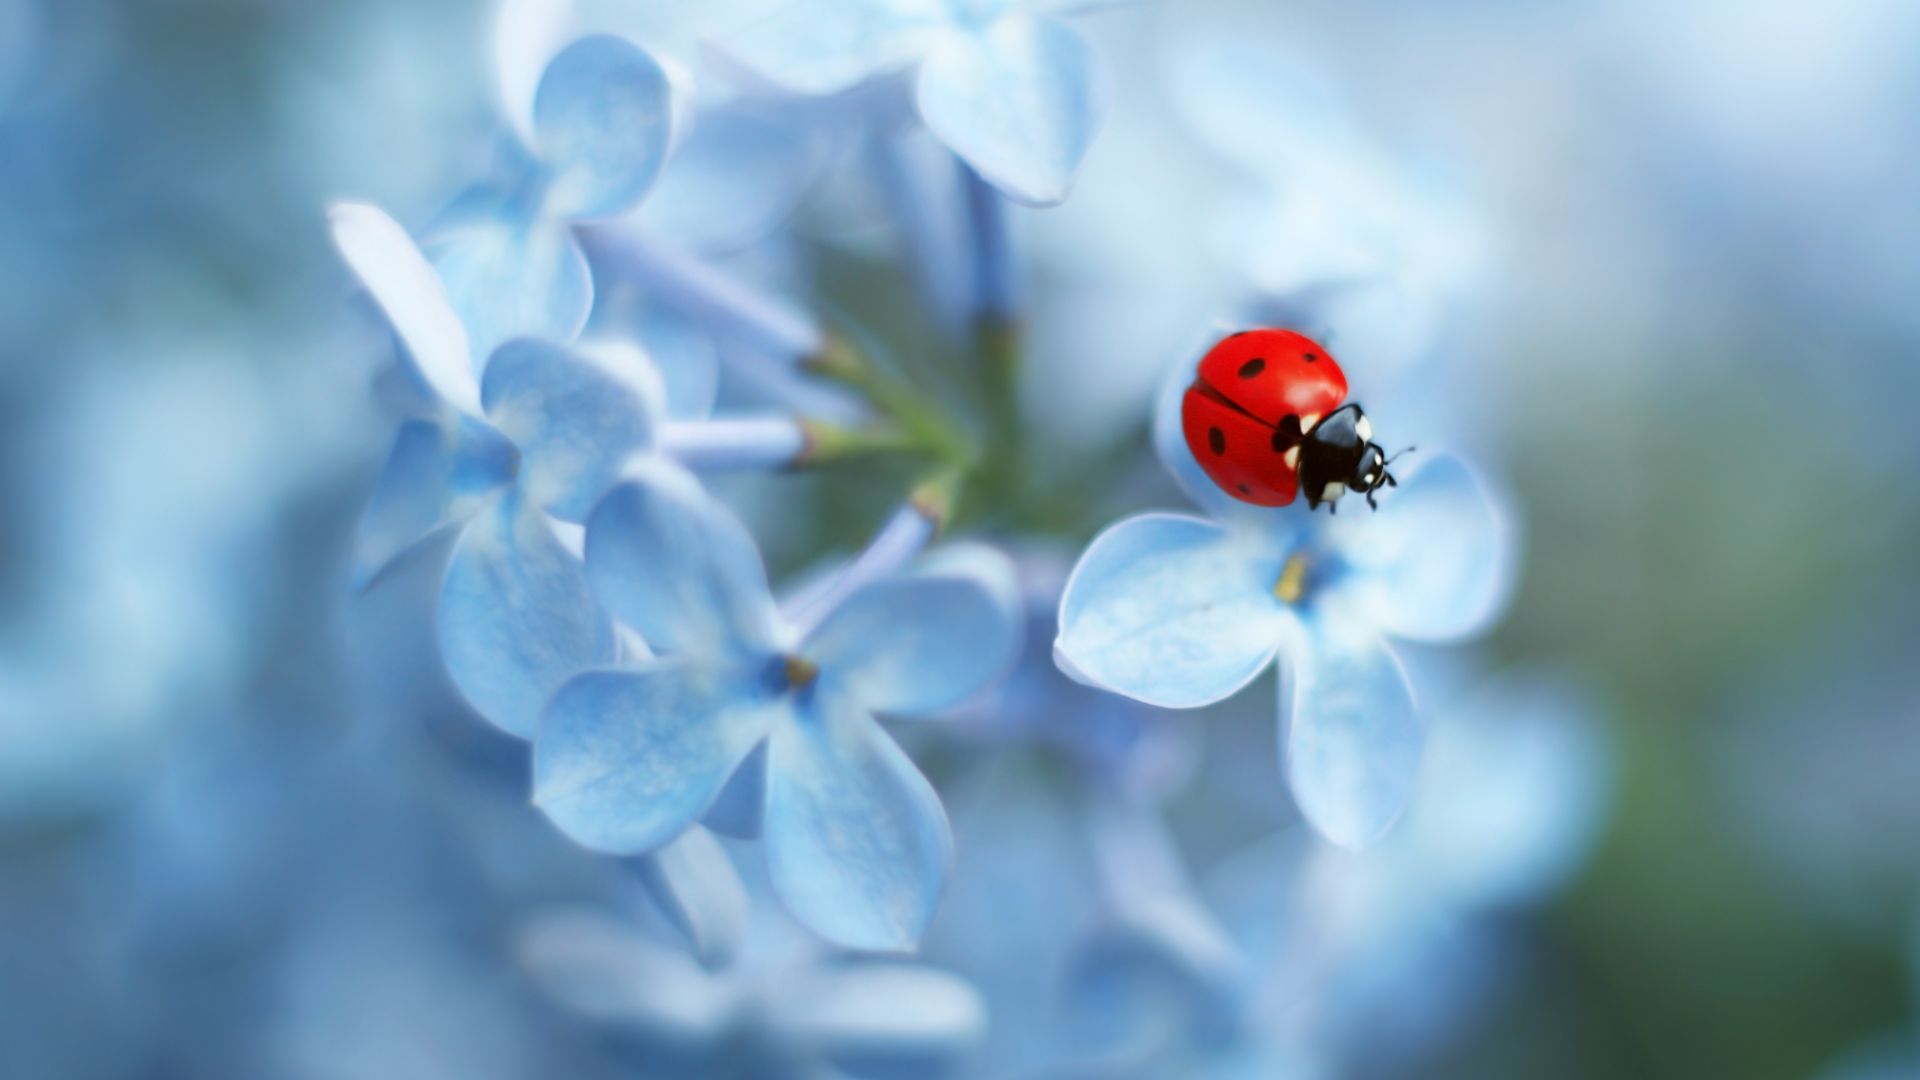 Божья коровка, Ladybug, flower, 4K (horizontal)